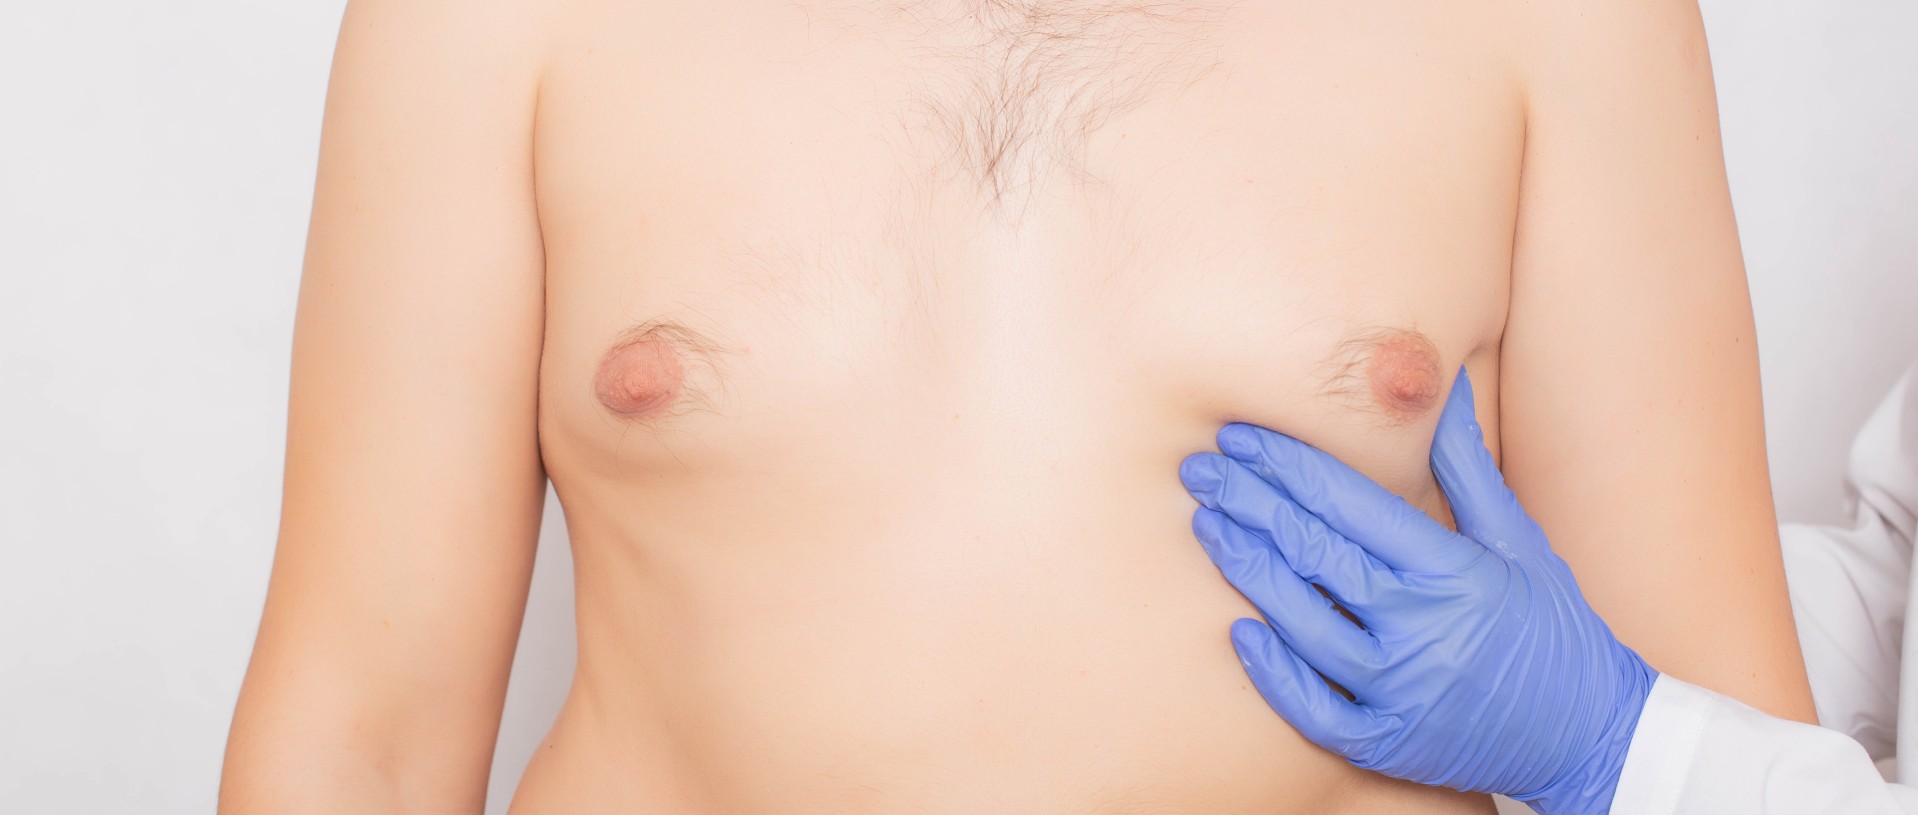 avnish bajaj recommends flat chest puffy nipples pic